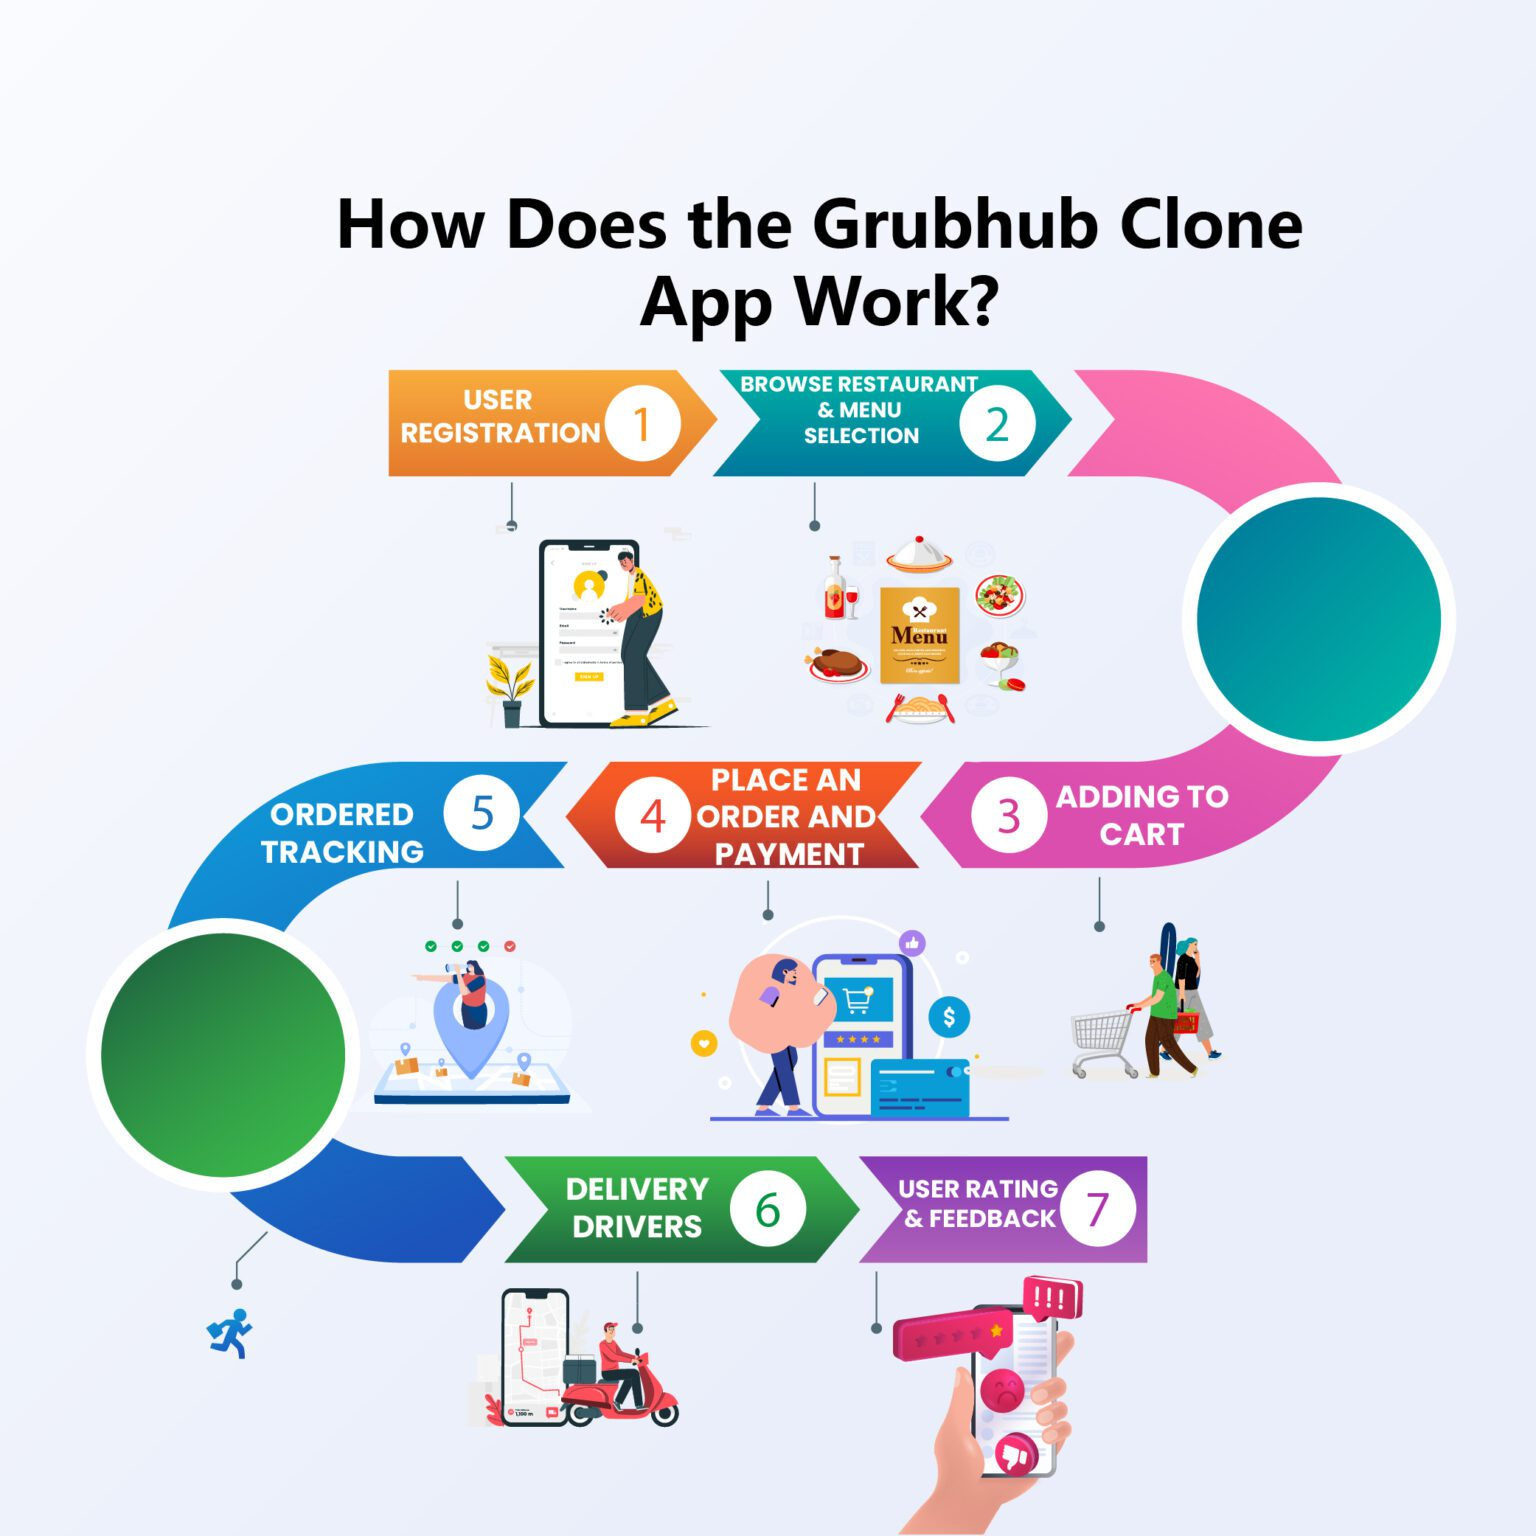 How Does the Grubhub Clone App Work?